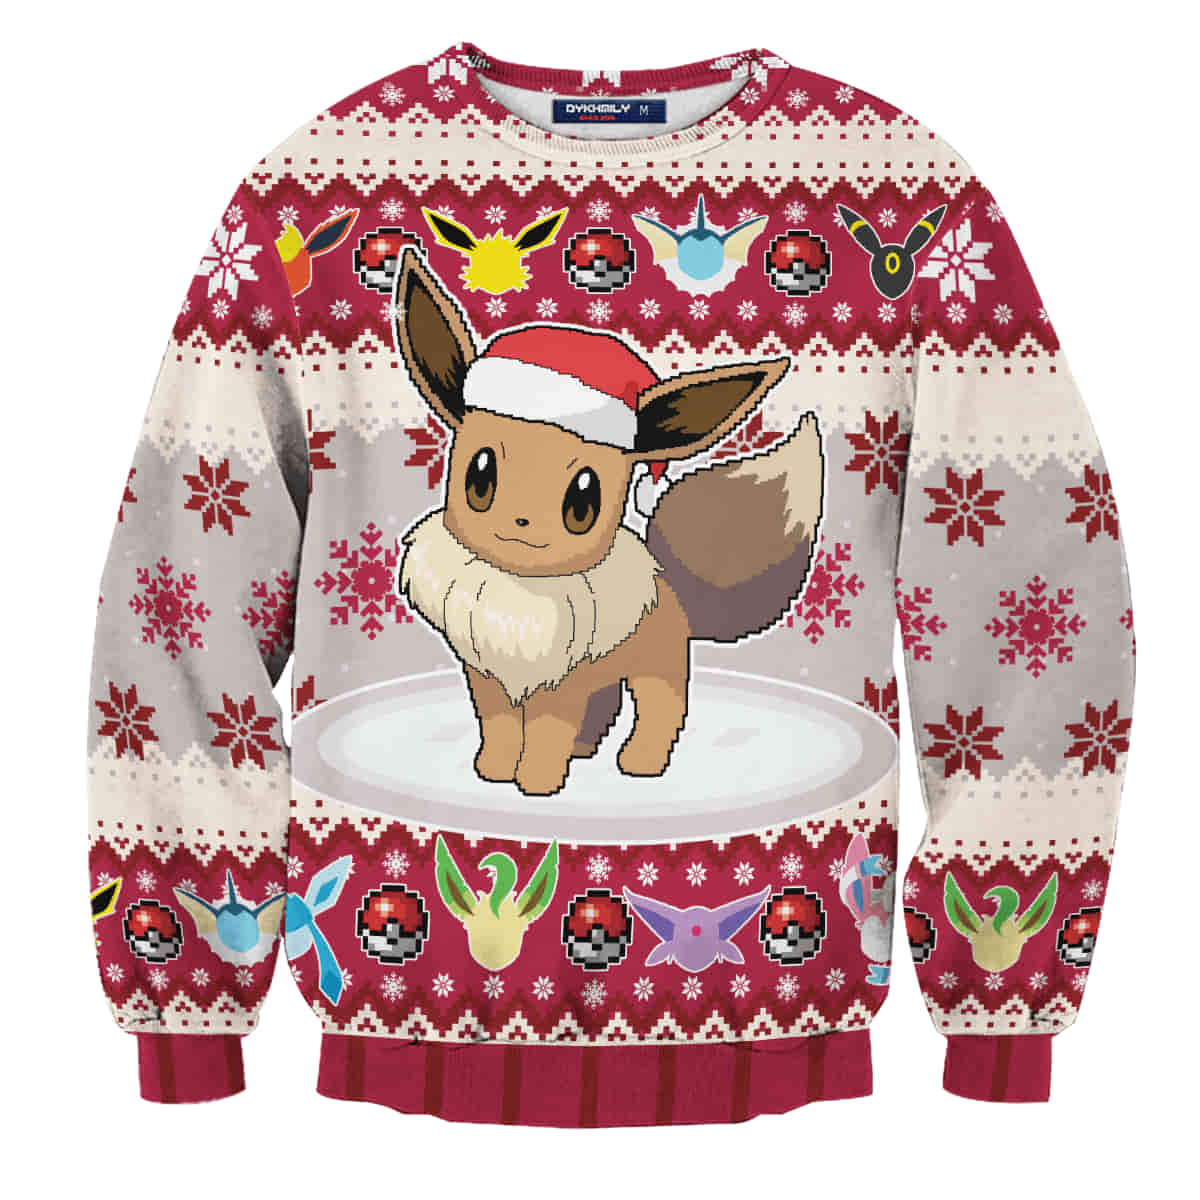 Eeveelution Pokemon Wool Knitted Sweater, Christmas 3D Sweater